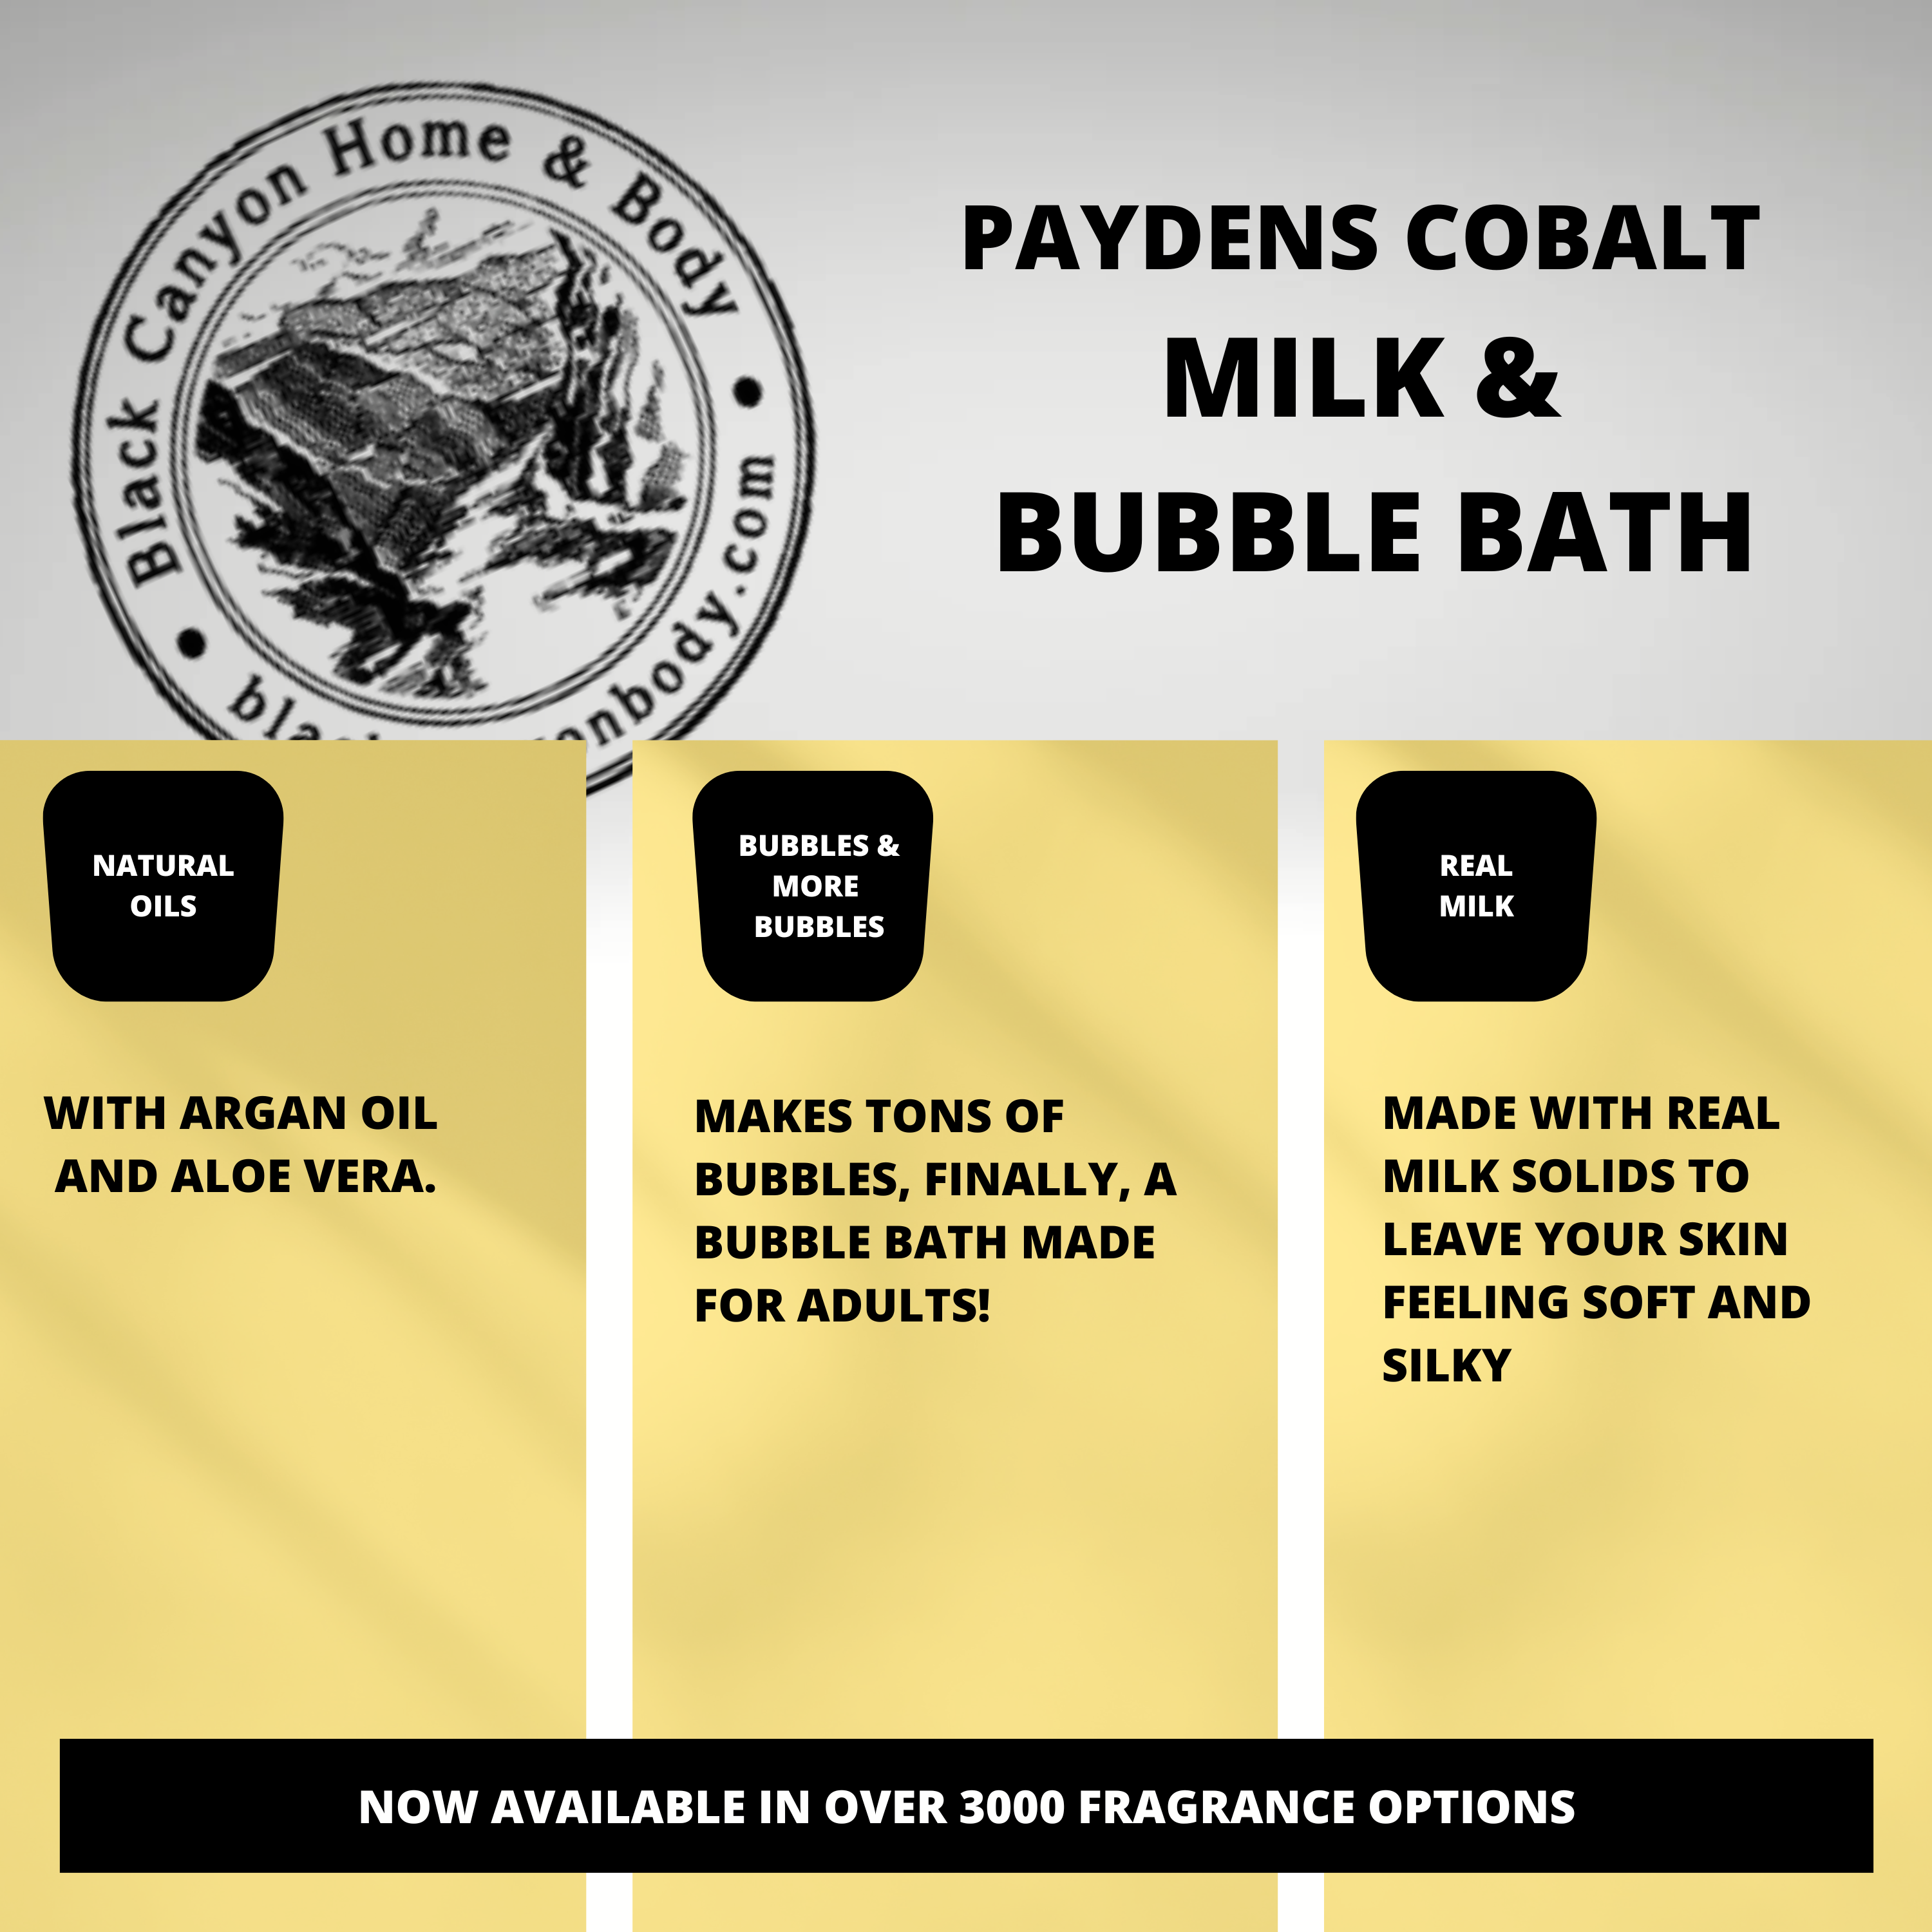 Black Canyon Shirley Temple Scented Milk & Bubble Bath